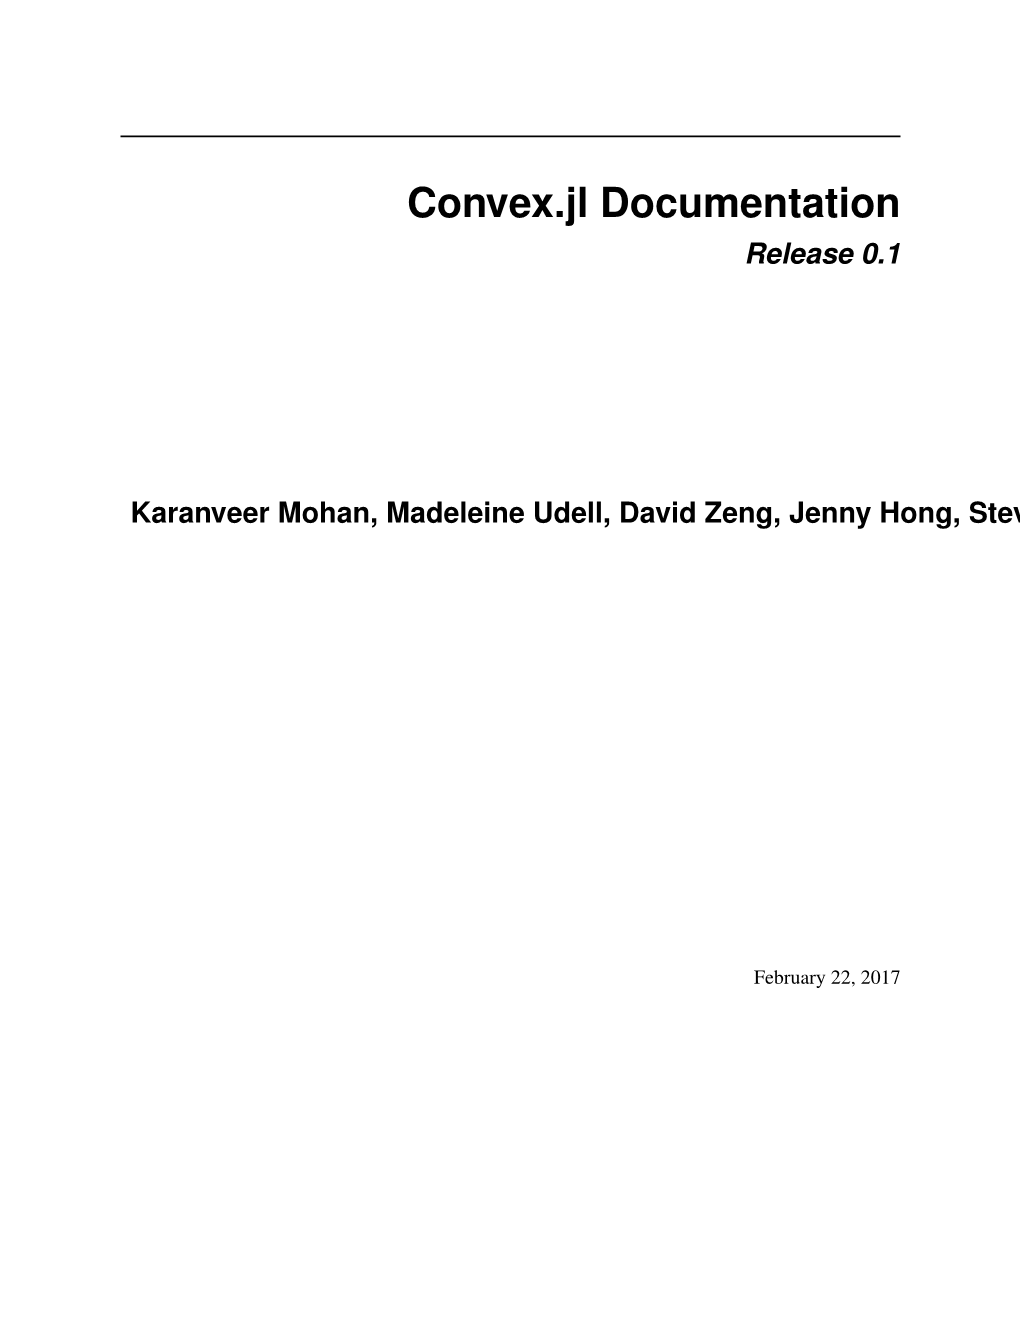 Convex.Jl Documentation Release 0.1